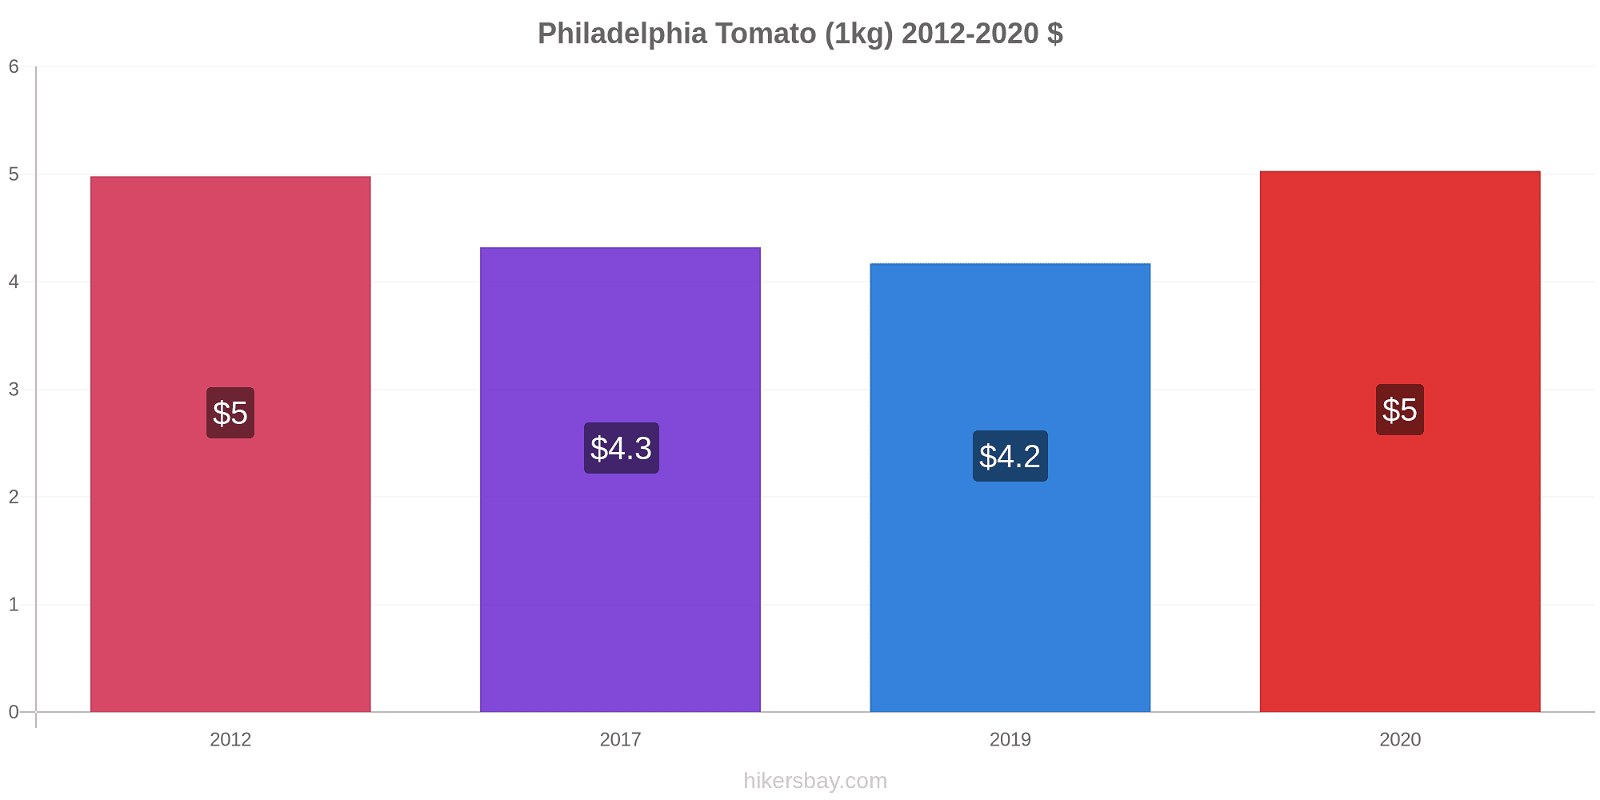 Philadelphia price changes Tomato (1kg) hikersbay.com